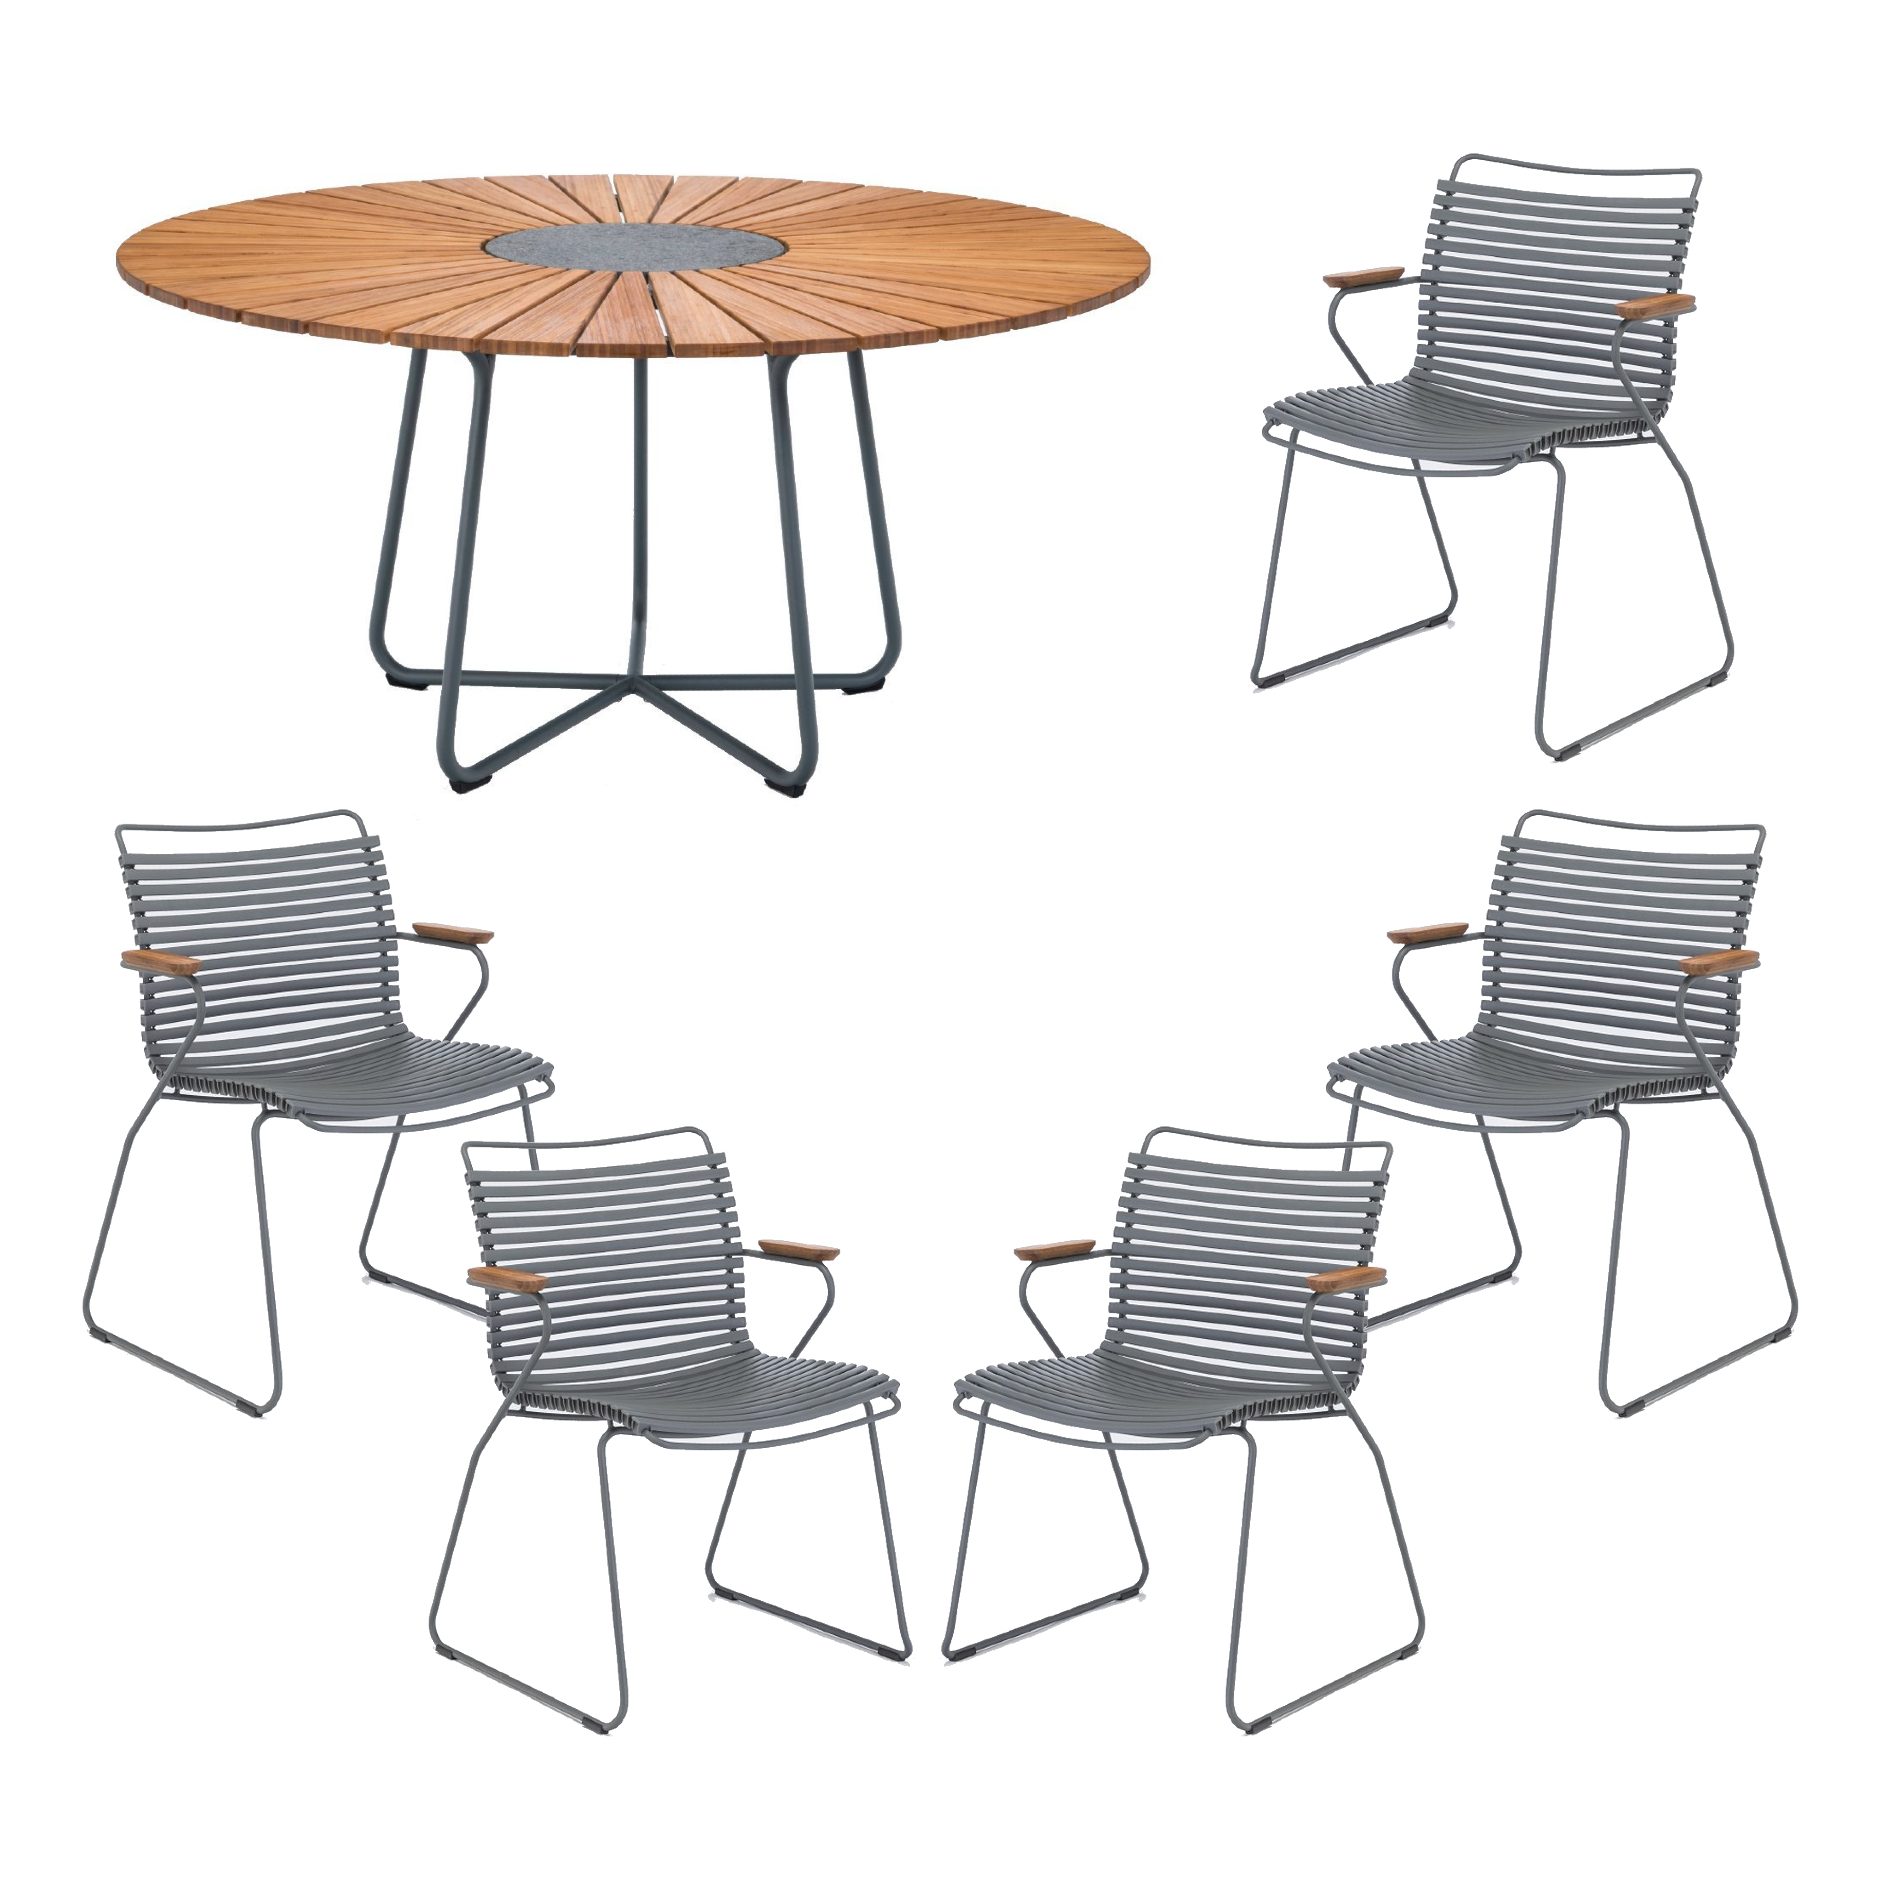 Houe Gartenmöbel-Set mit Tisch "Circle" Ø 150 cm und 5x Stapelsessel "Click", Lamellen dunkelgrau, Tischplatte Bambus